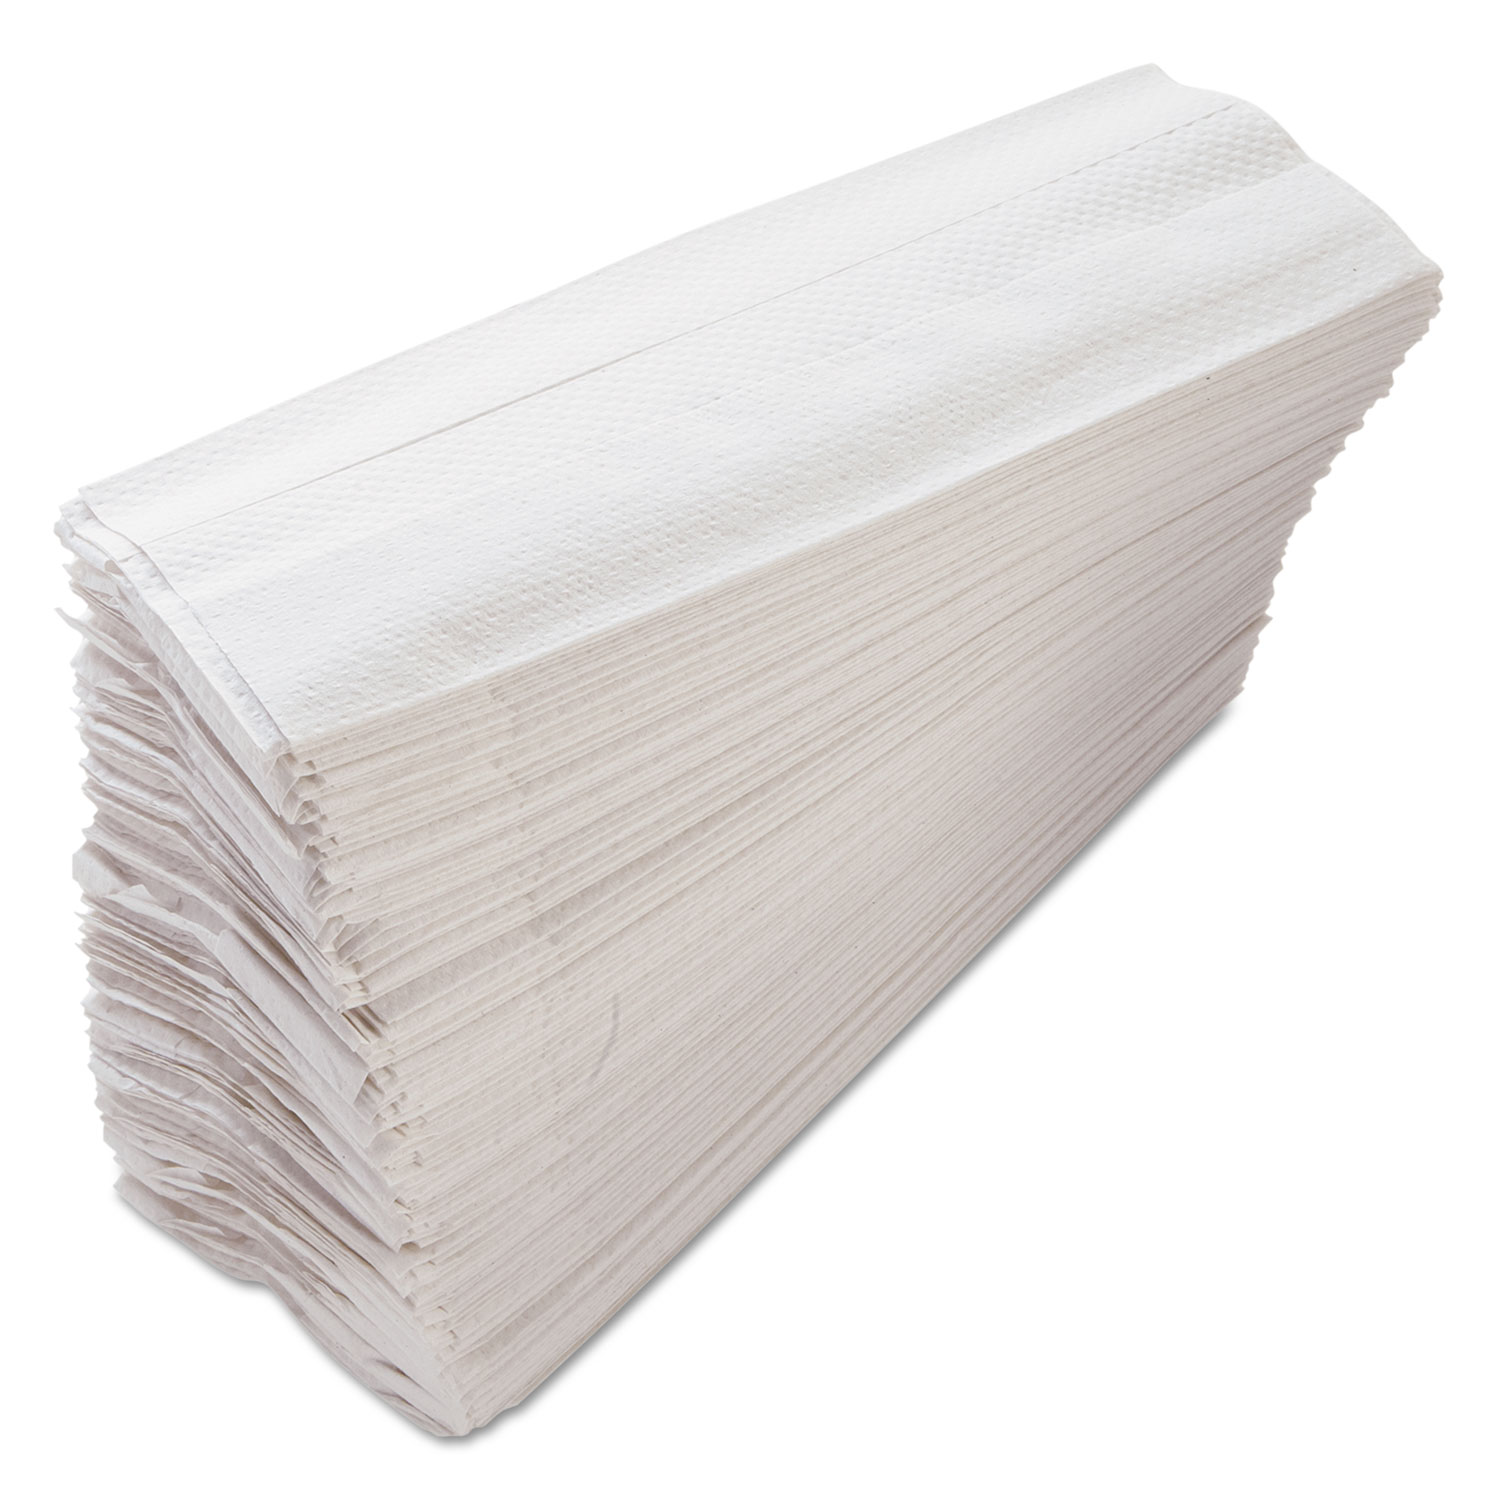 Morsoft C-Fold Paper Towels, 11 x 10.13, White, 200 Towels/Pack, 12 Packs/Carton, 2,400 Towels/Carton